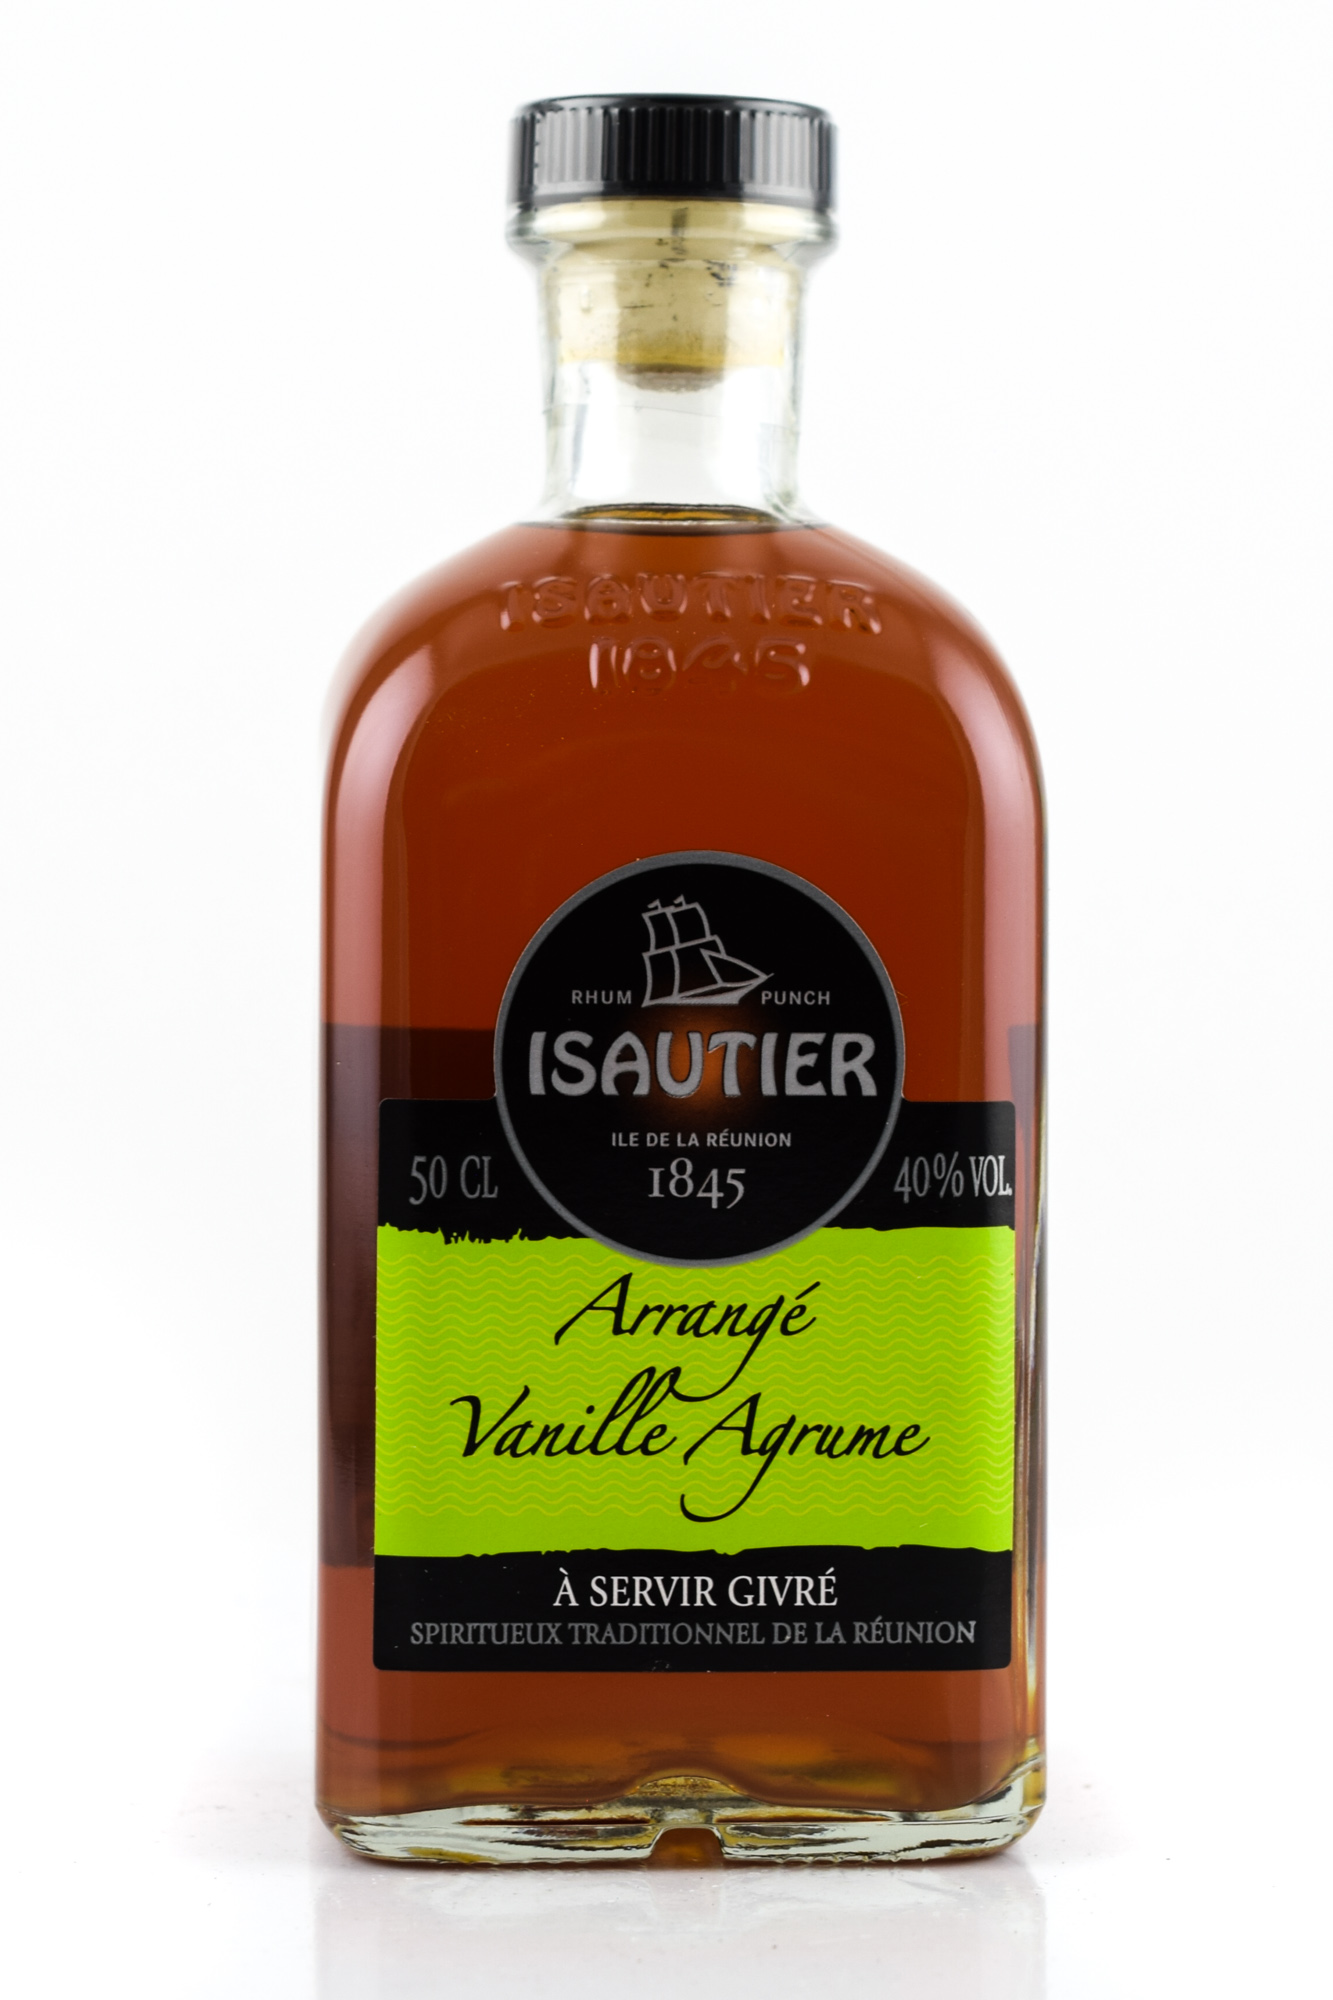 Isautier Arrangé Vanille Agrume 40%vol. 0,5l, Rum